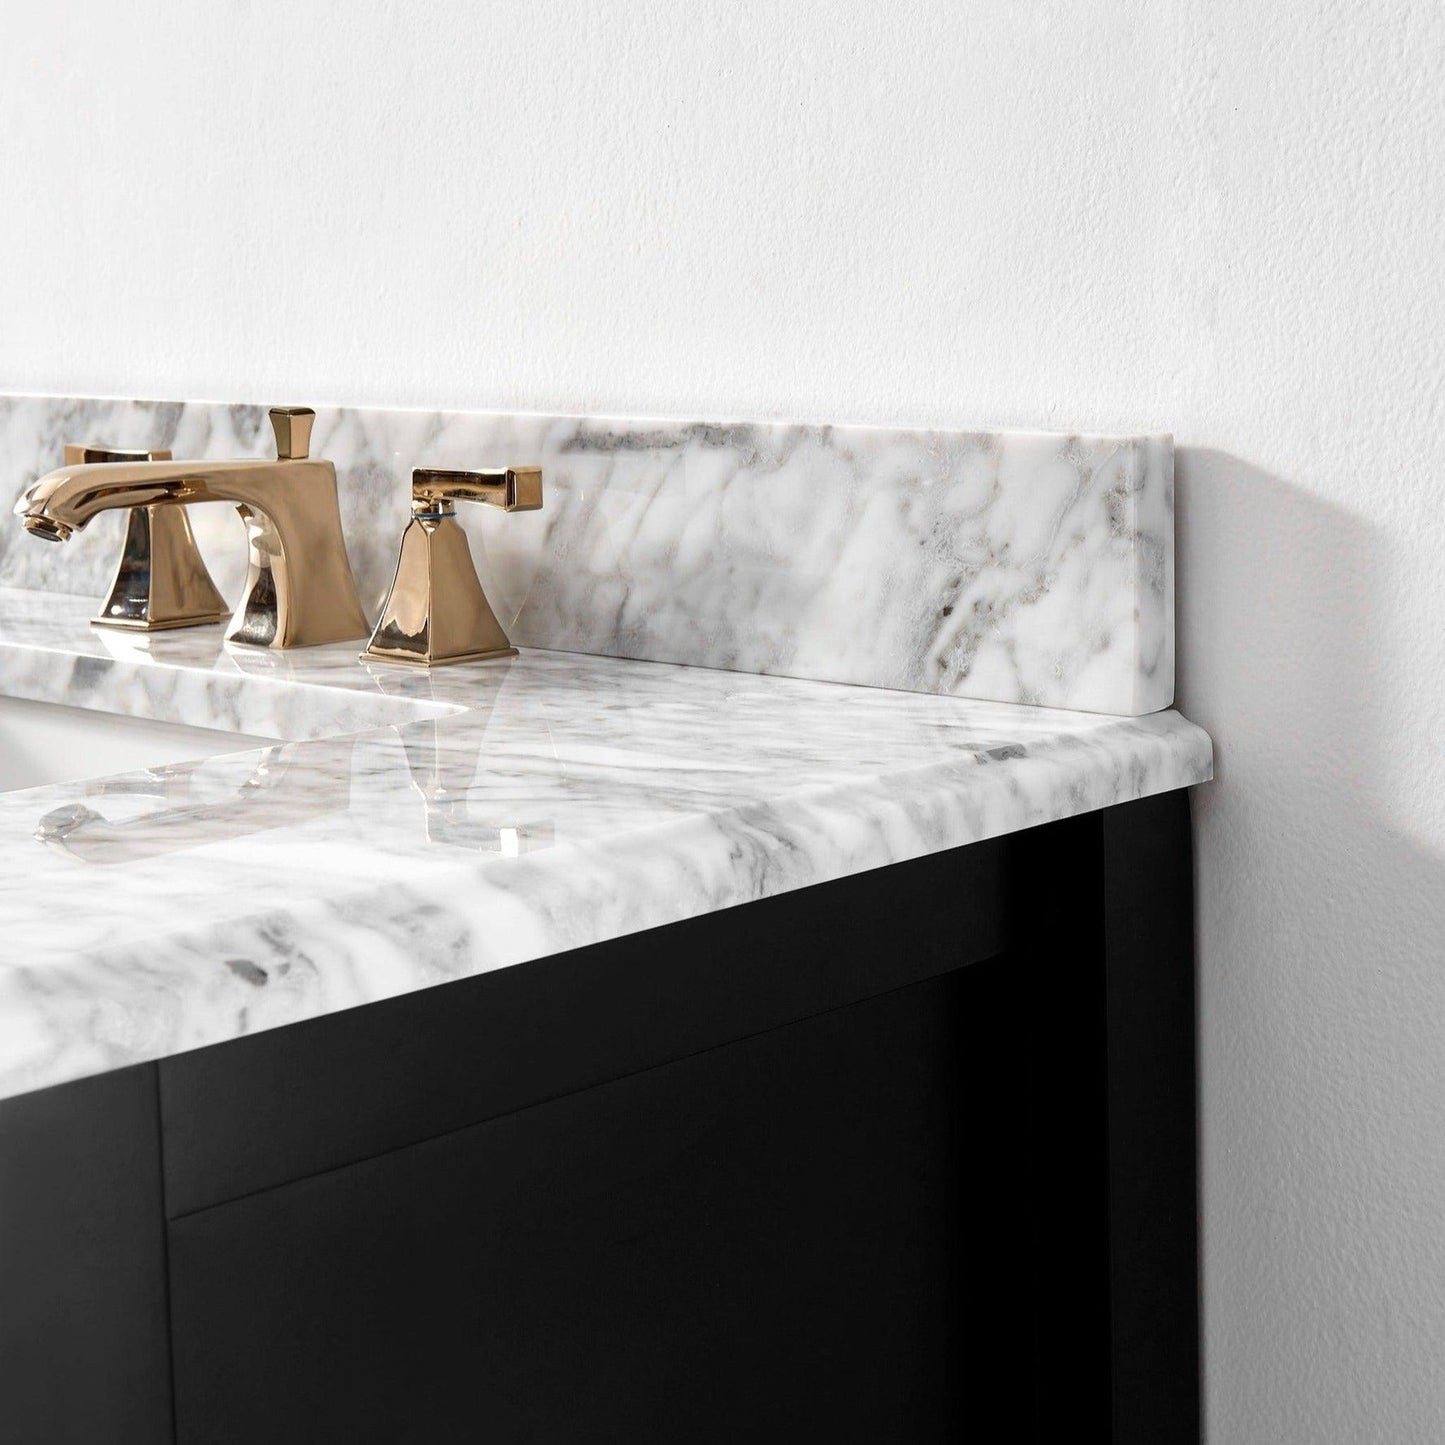 Ancerre Designs Hayley 48" Black Onyx 5-Drawer 1-Shelf Bathroom Vanity With Italian Carrara White Marble Vanity Top, Single Farmhouse Undermount Apron Ceramic Sink, 4" White Marble Backsplash and Satin Brushed Gold Hardware